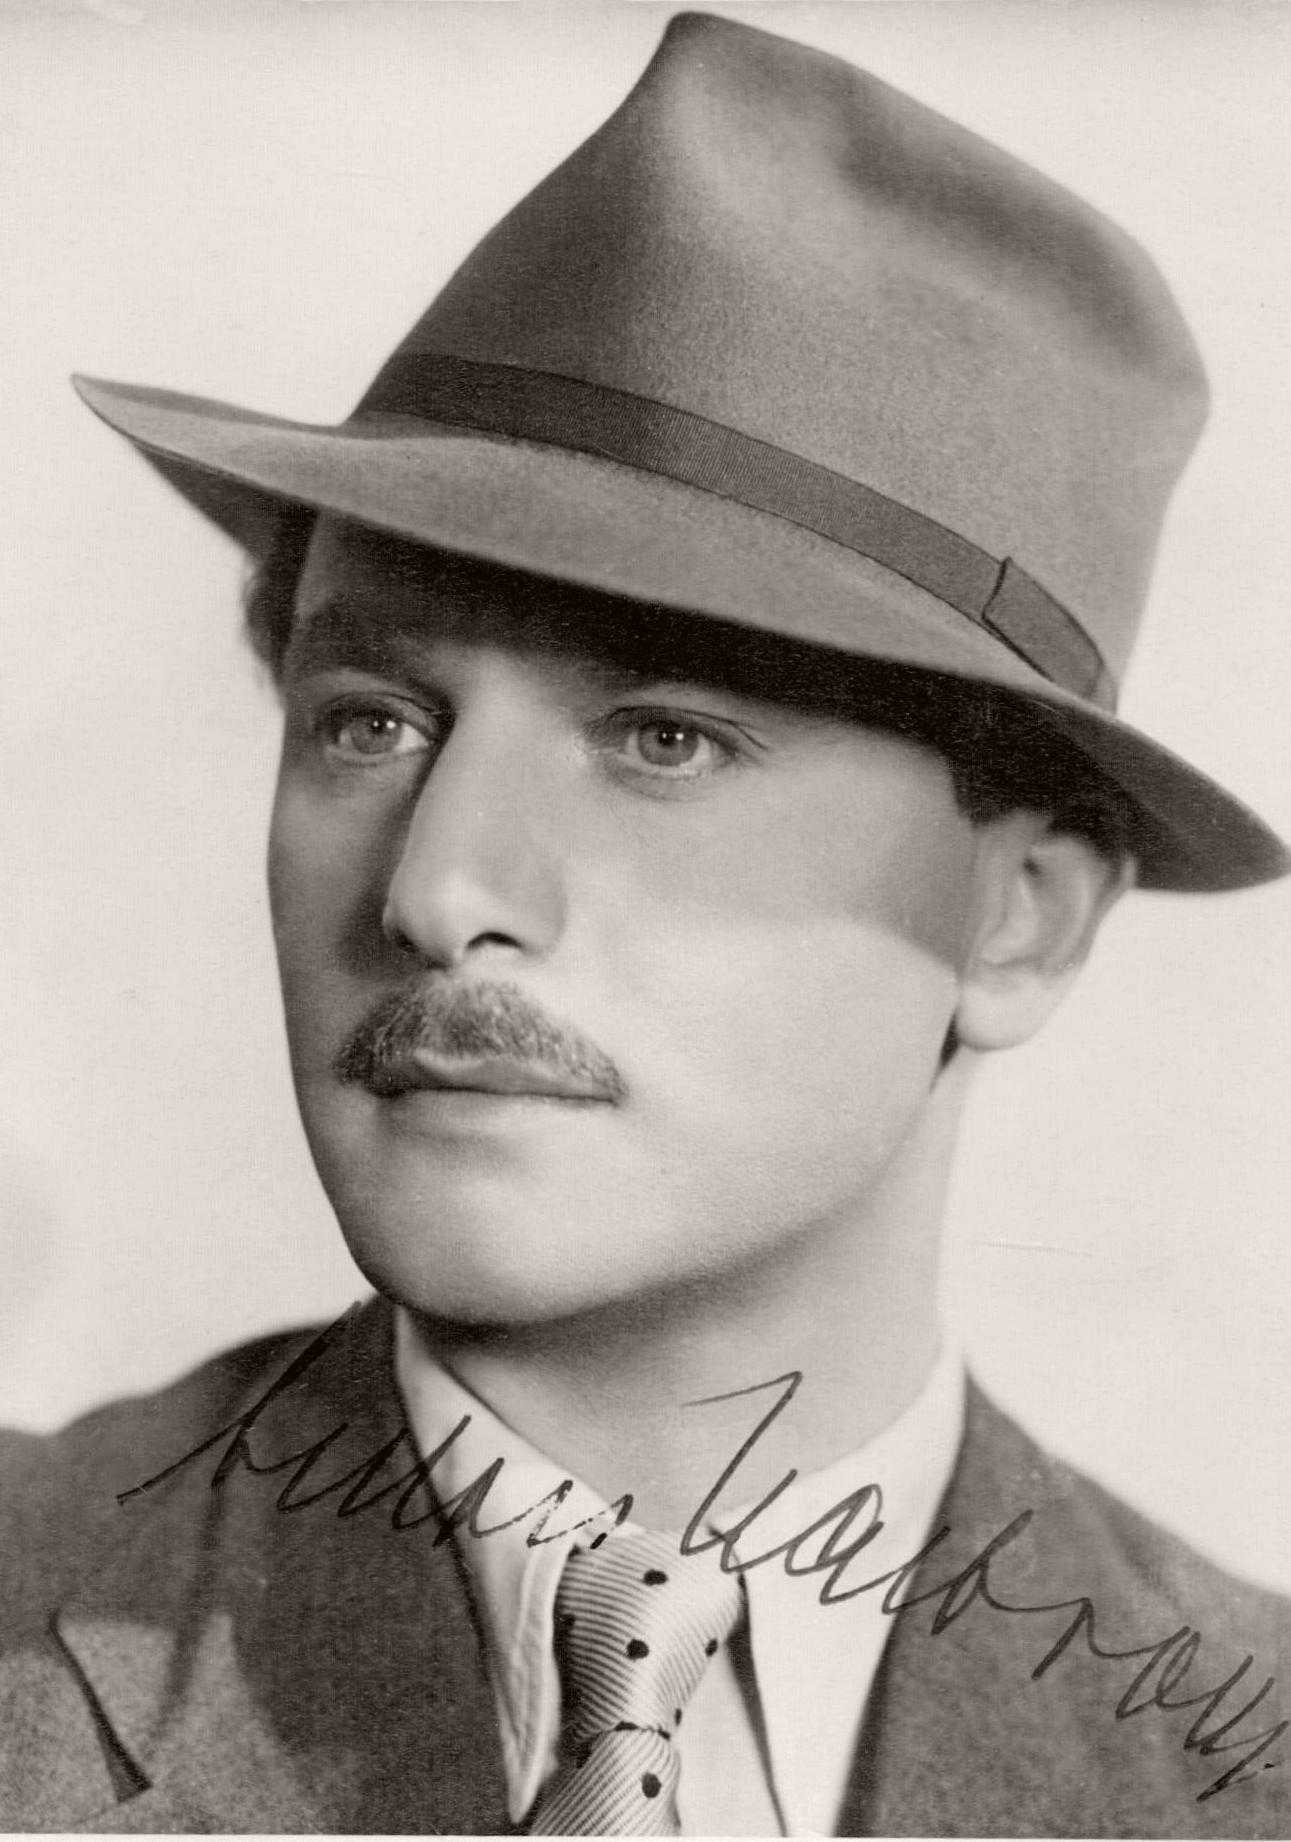 Autographed photo of Austrian actor, Anton Walbrook (1)